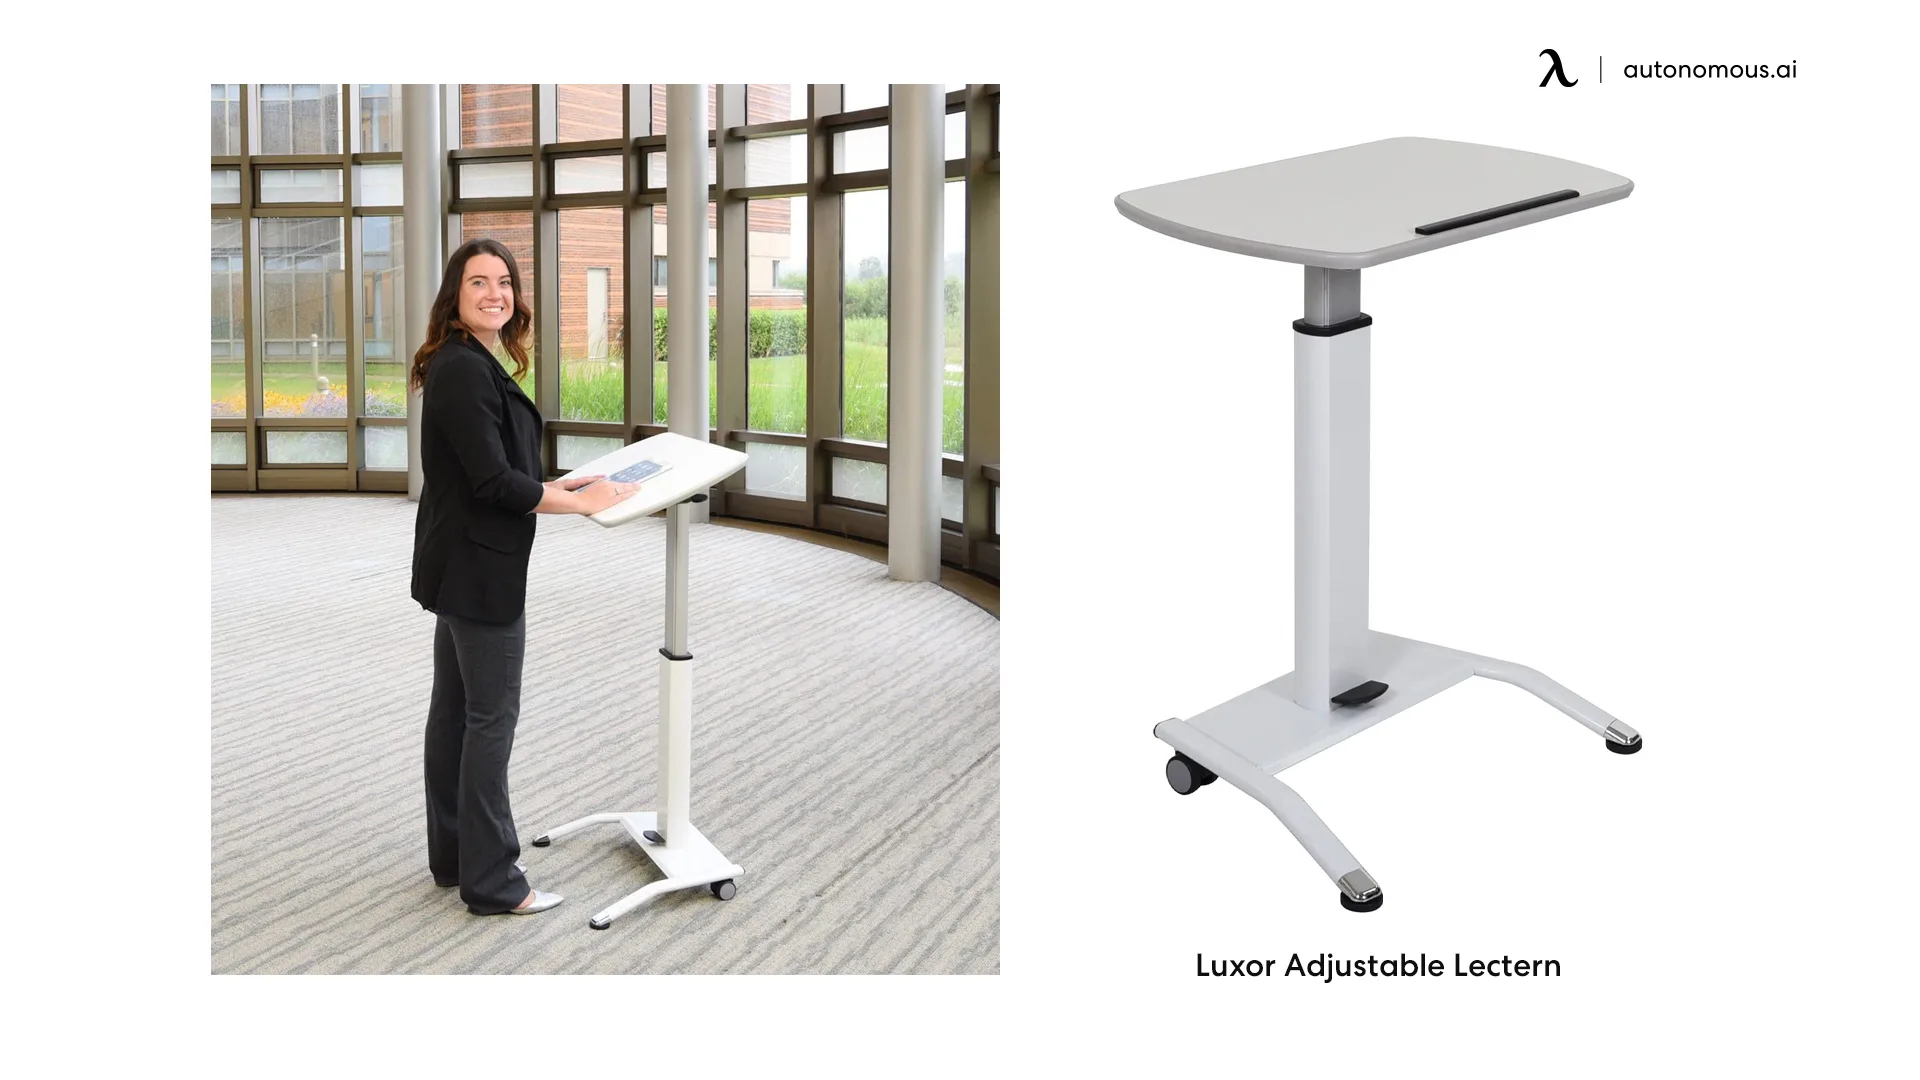 Luxor Adjustable Lectern standing desk on wheels